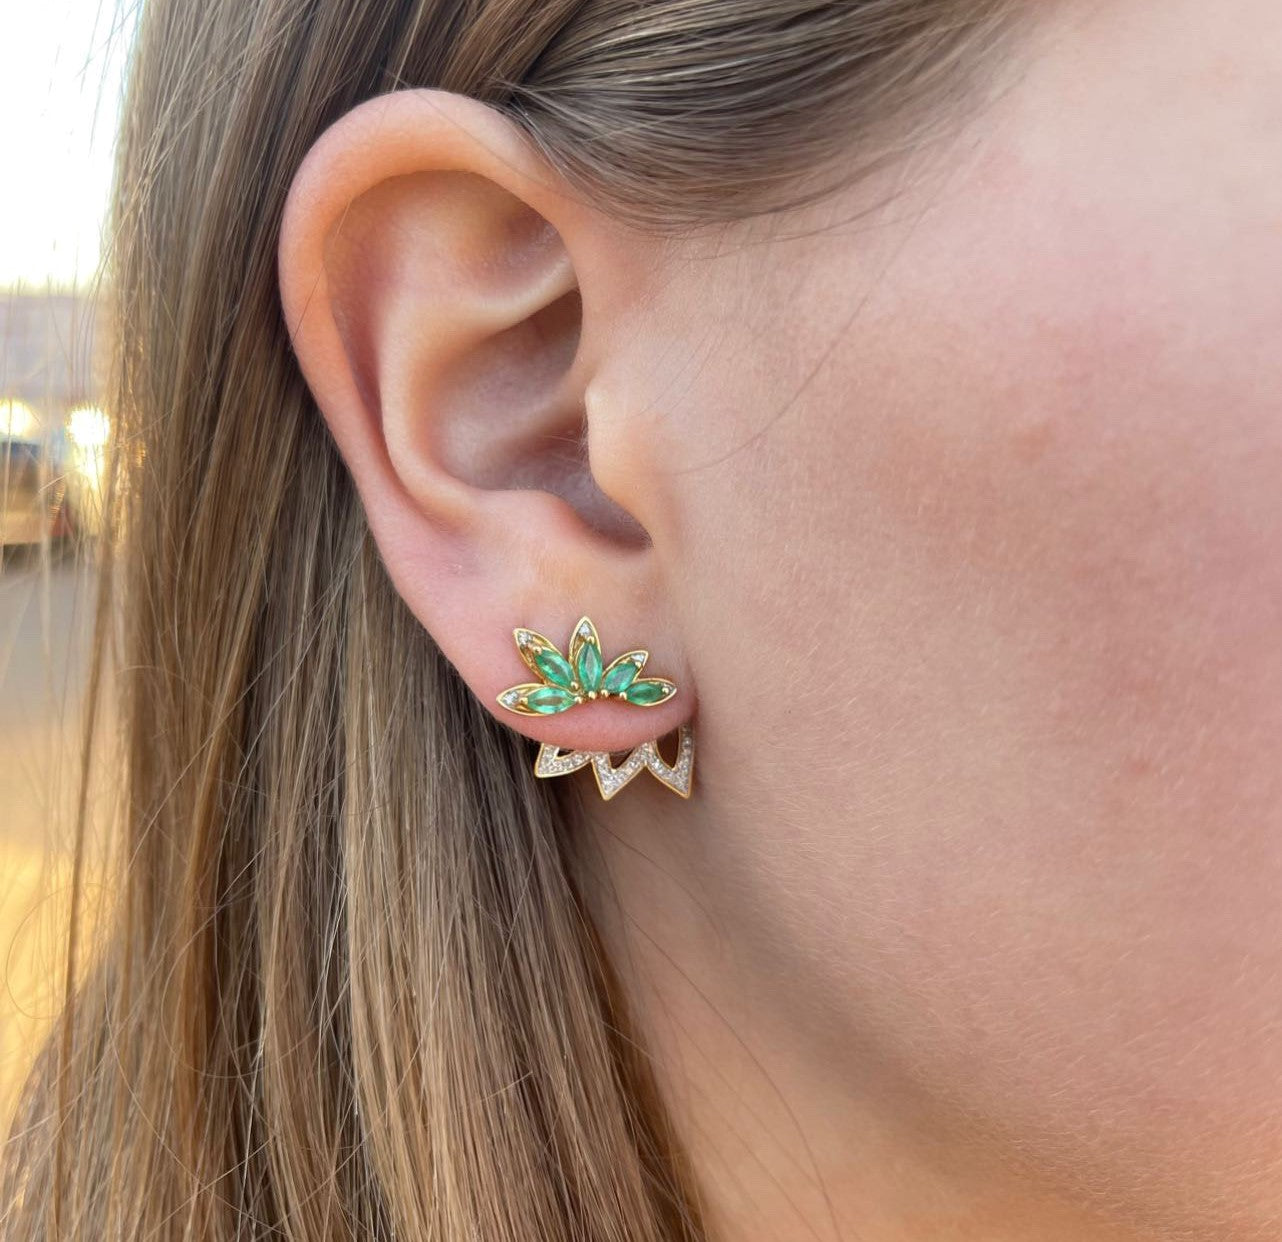 Emerald & Diamond Abstract Butterly Earrings W Jacket